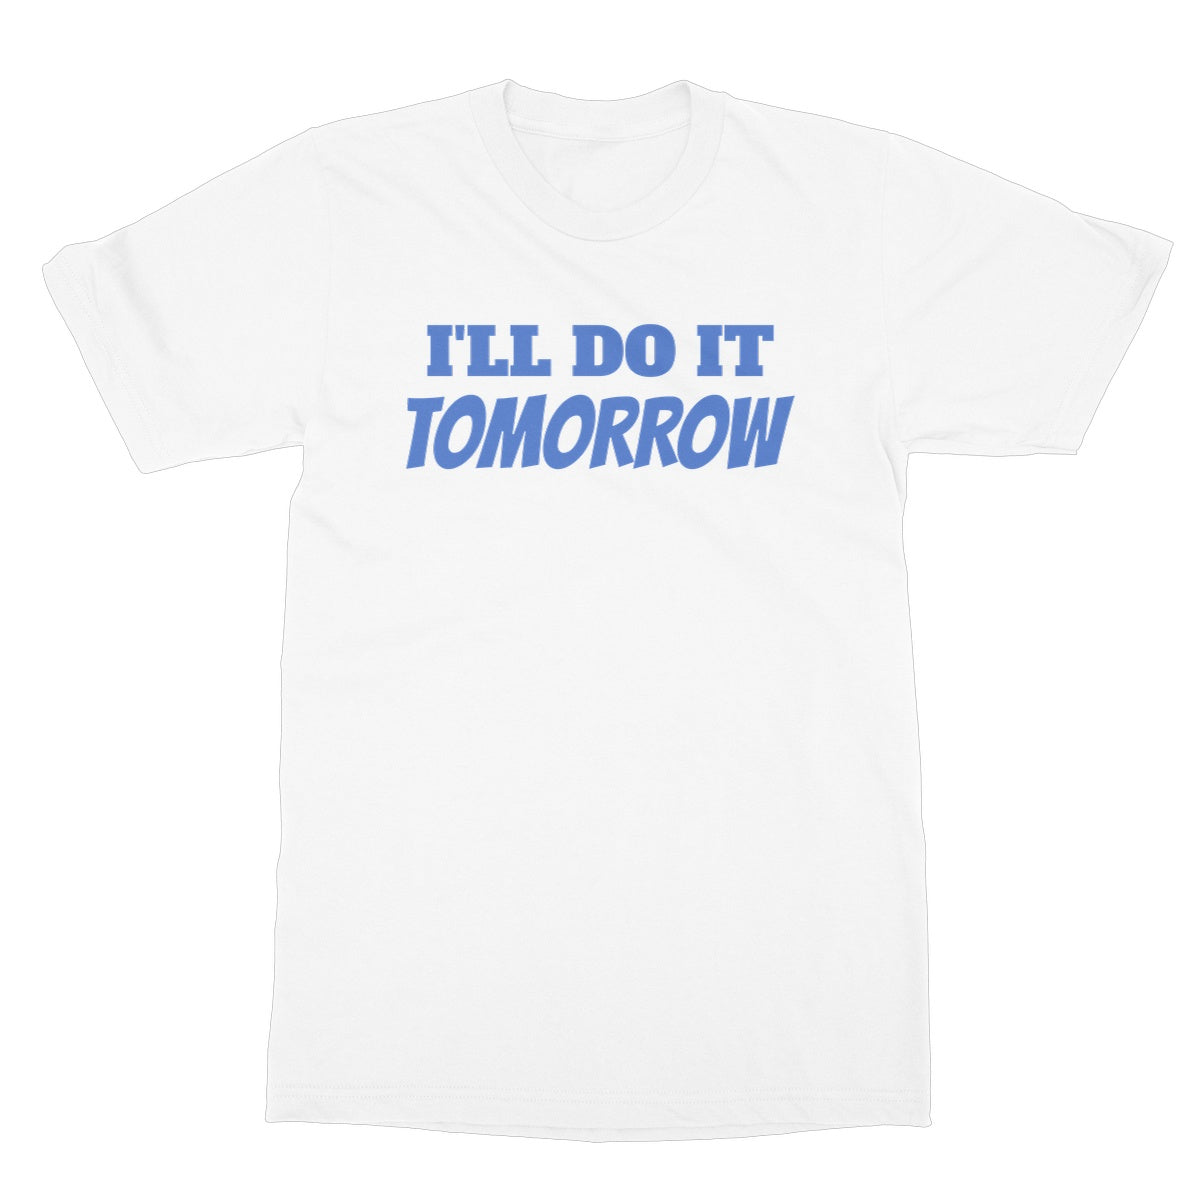 Ill do it tomorrow t shirt white